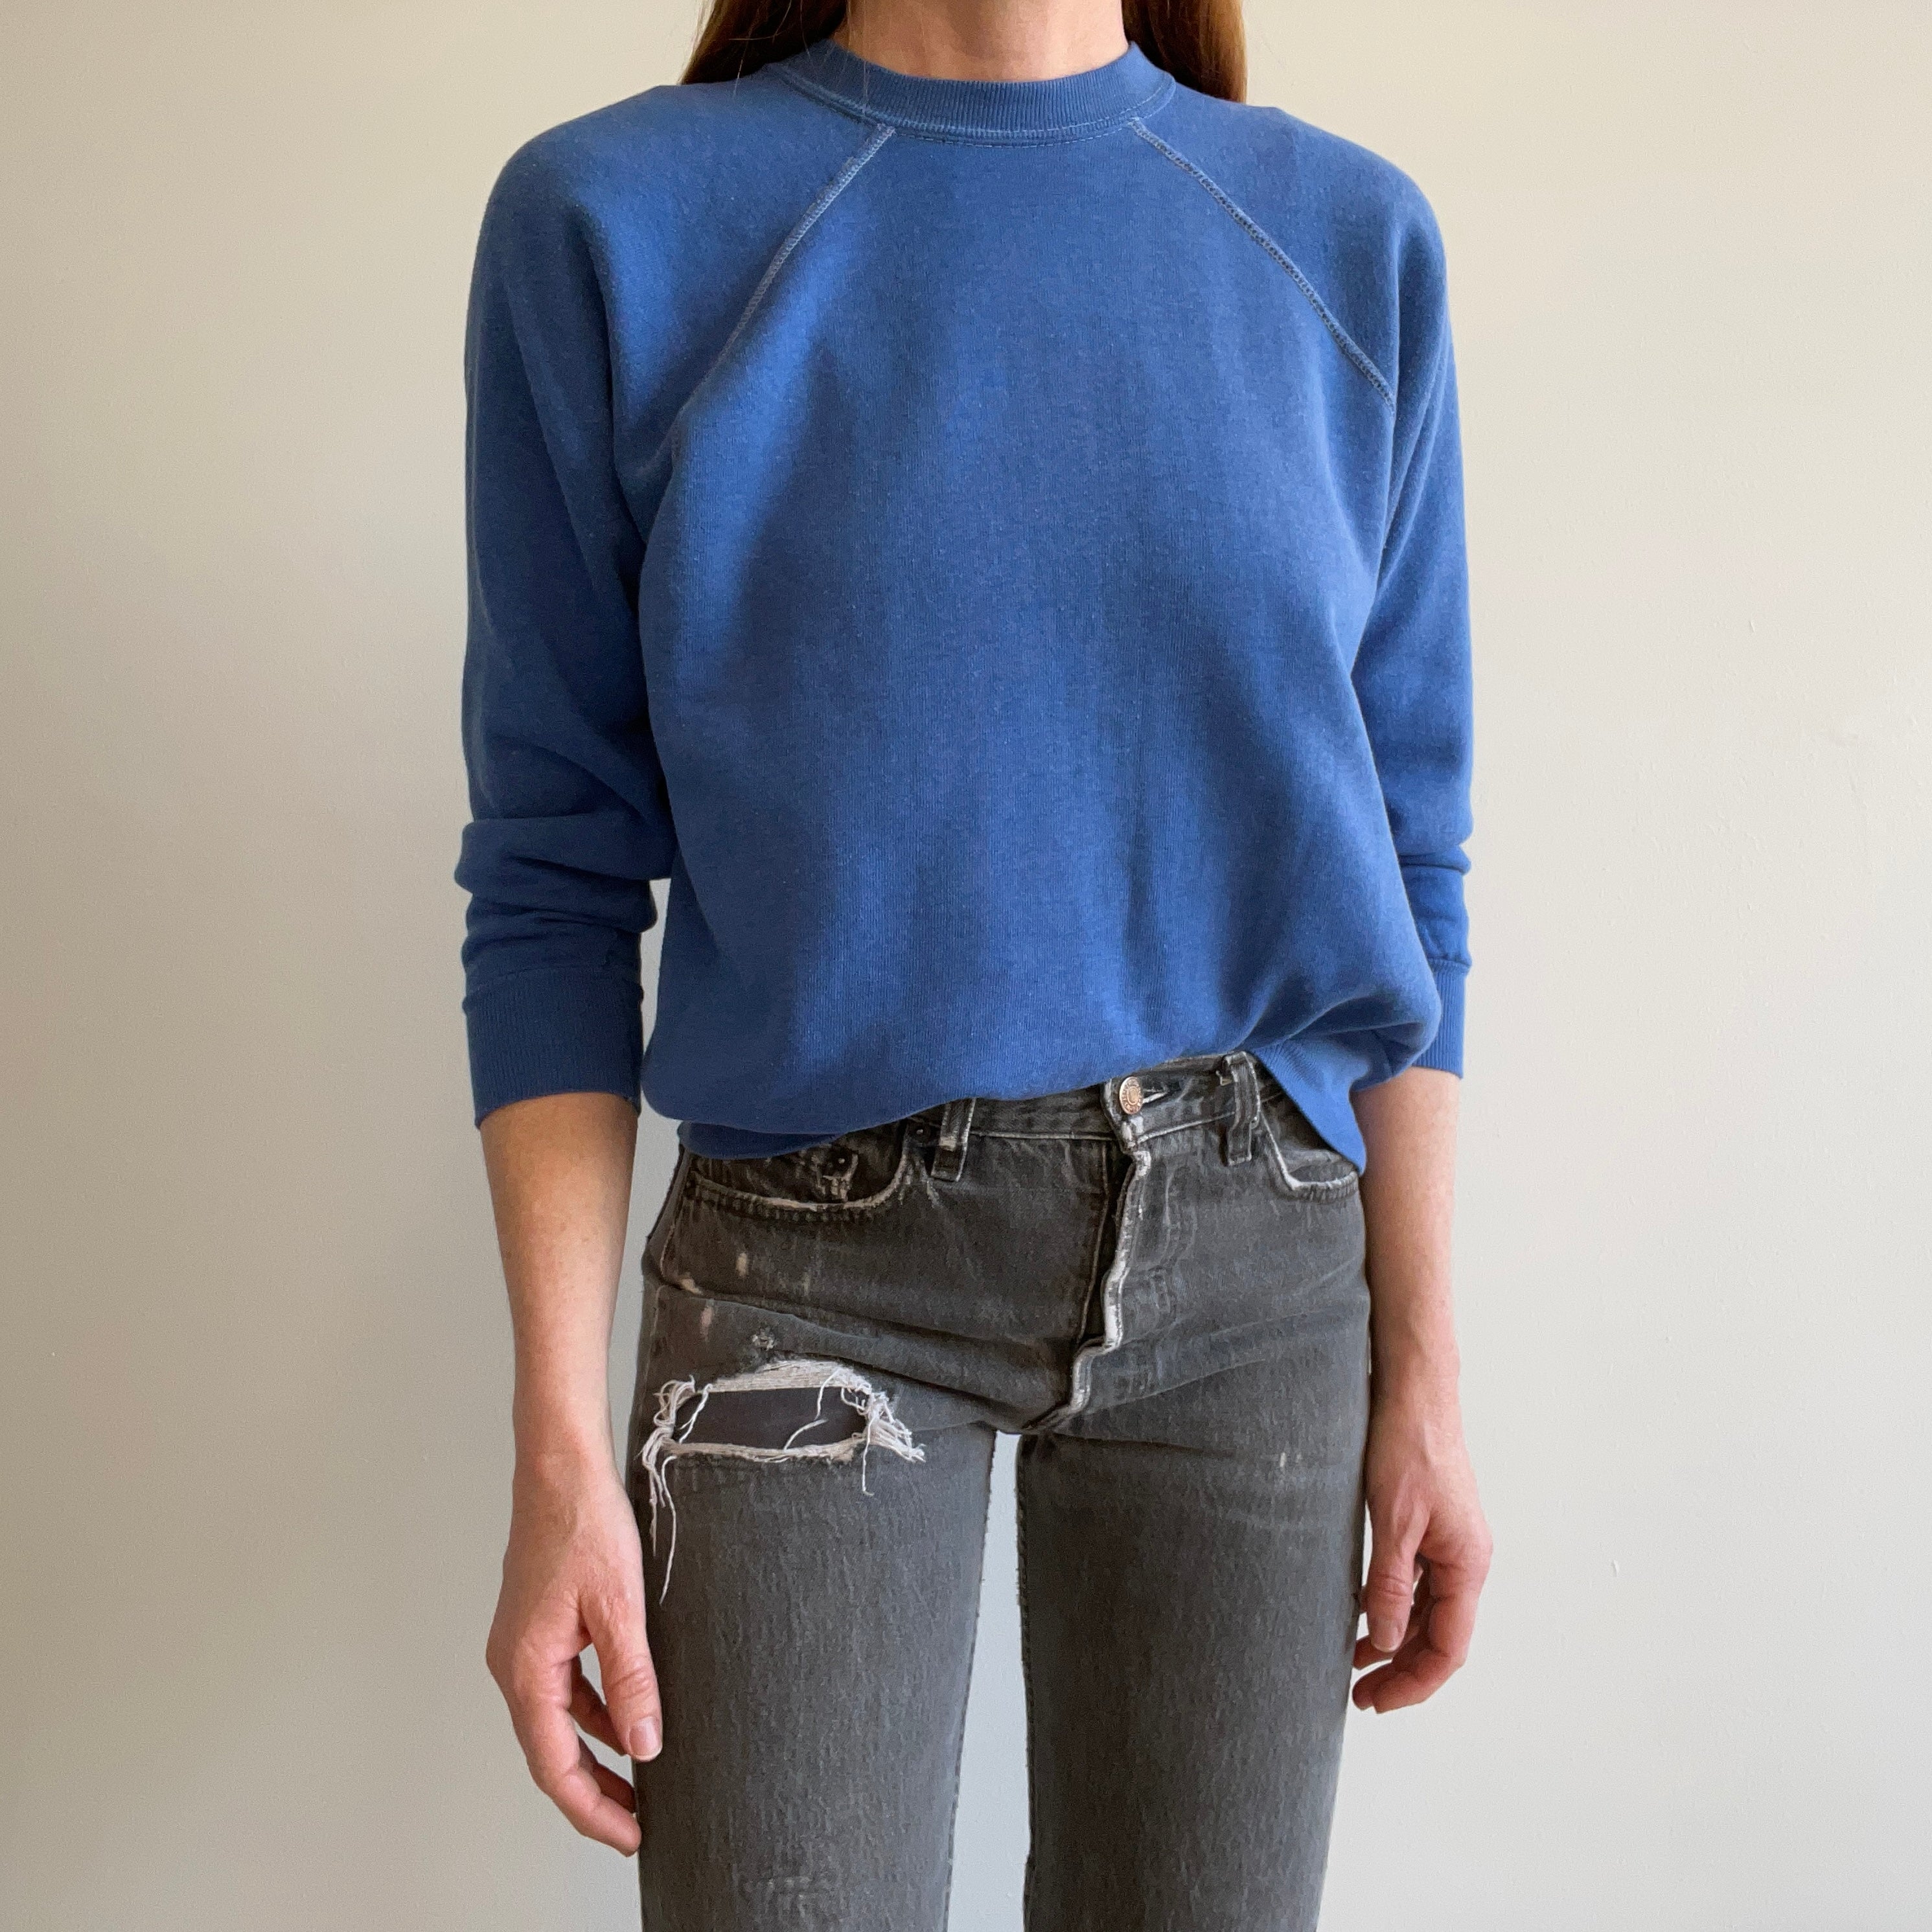 1980s Perfect Blue Sweatshirt (IMO)